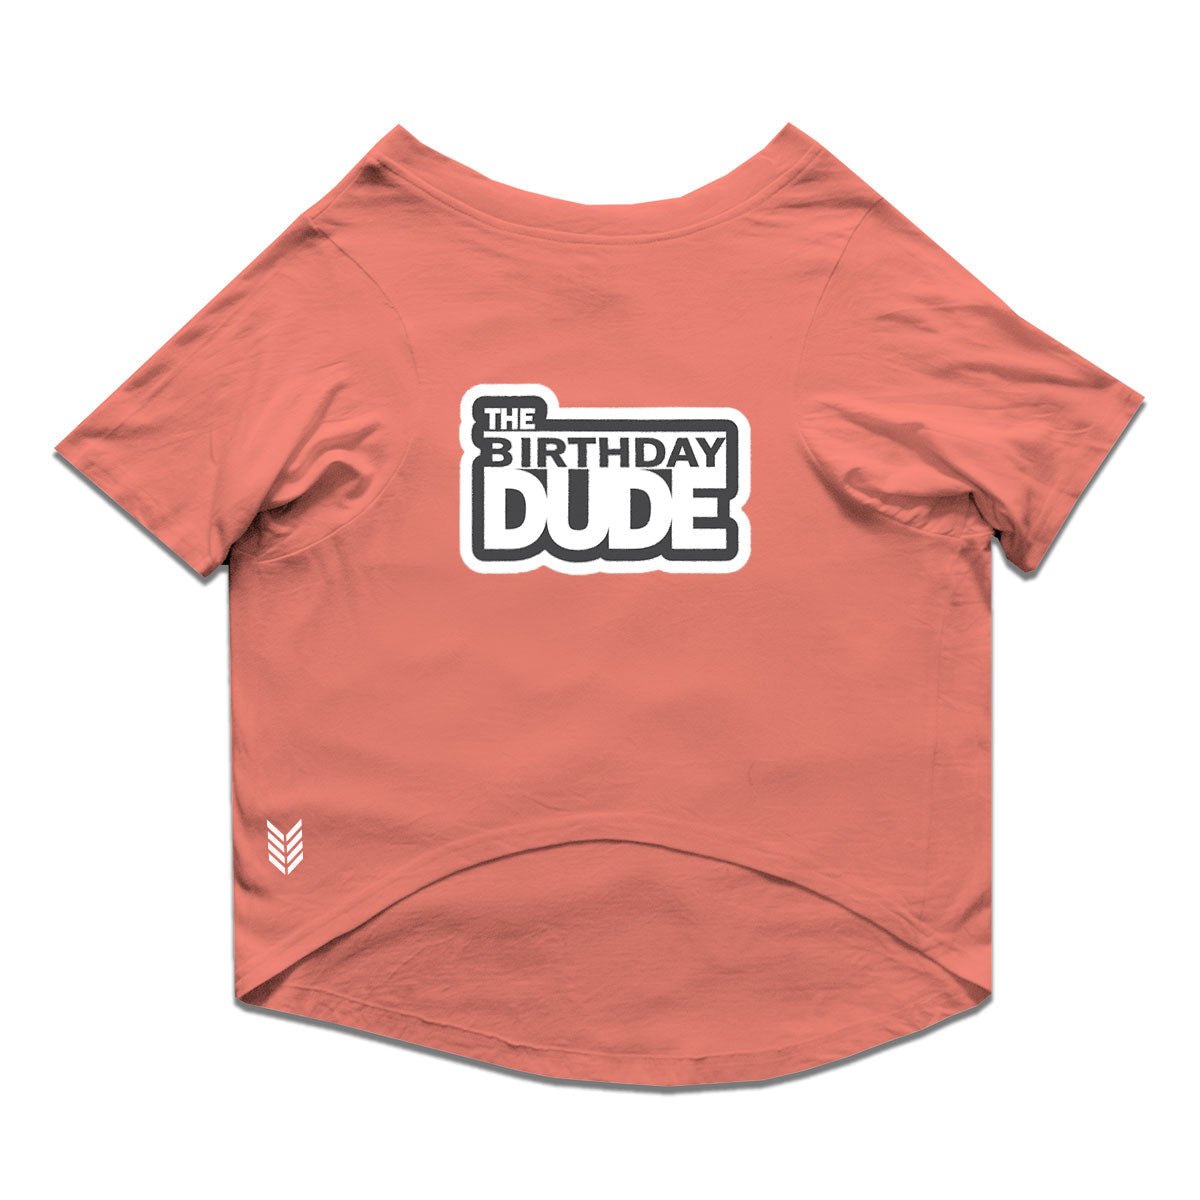 Ruse / Salmon Ruse Basic Crew Neck 'The Birthday Dude' Printed Half Sleeves Dog Tee15